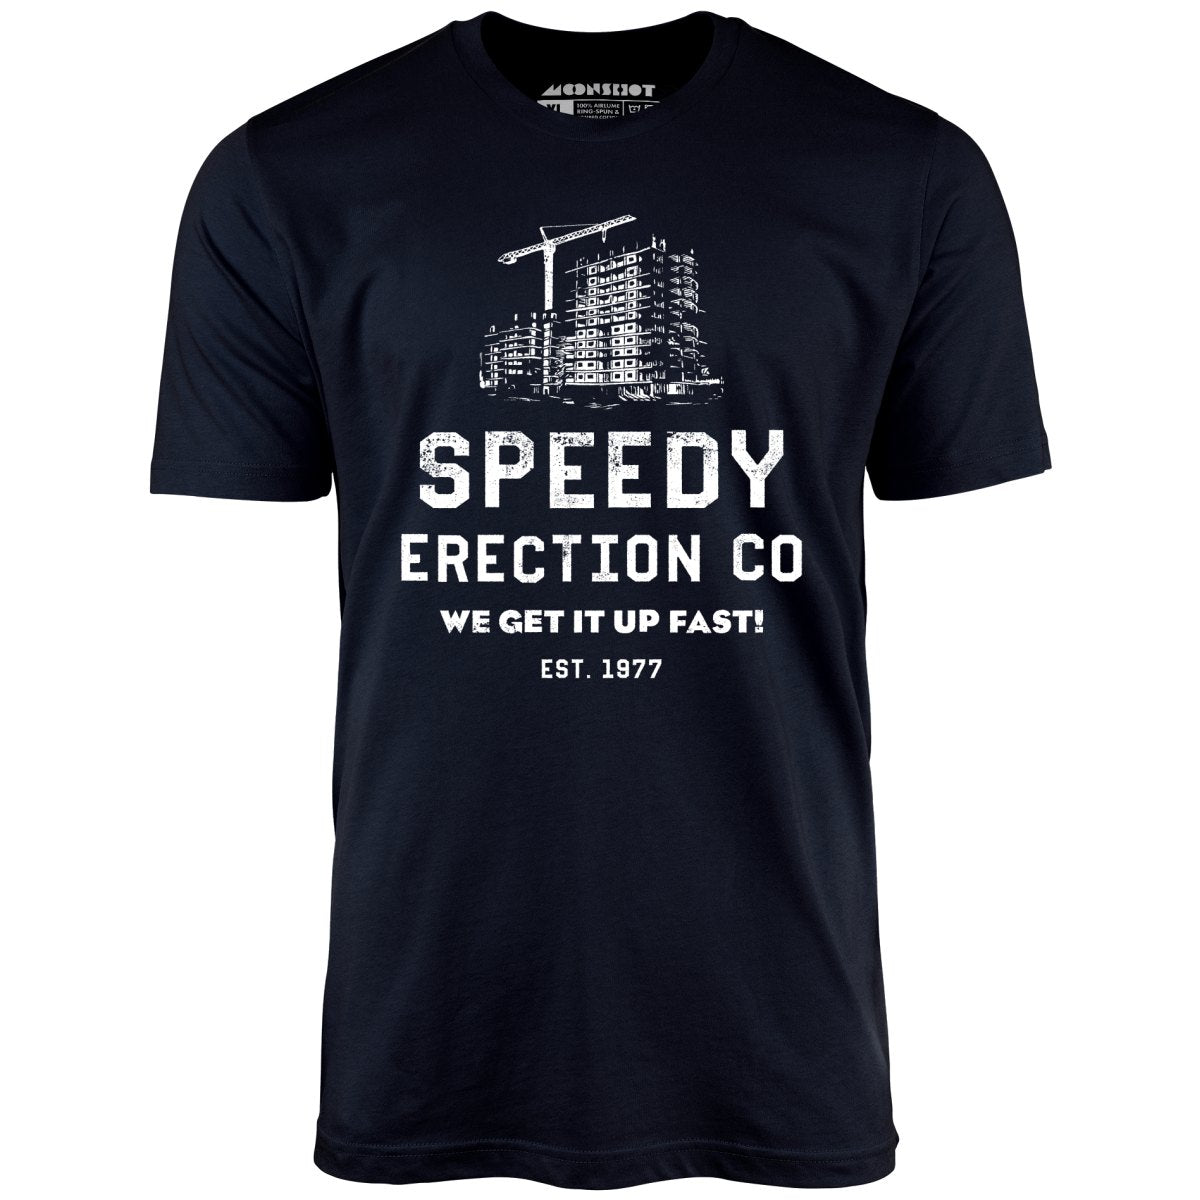 Speedy Erection Co. We Get it Up Fast - Unisex T-Shirt